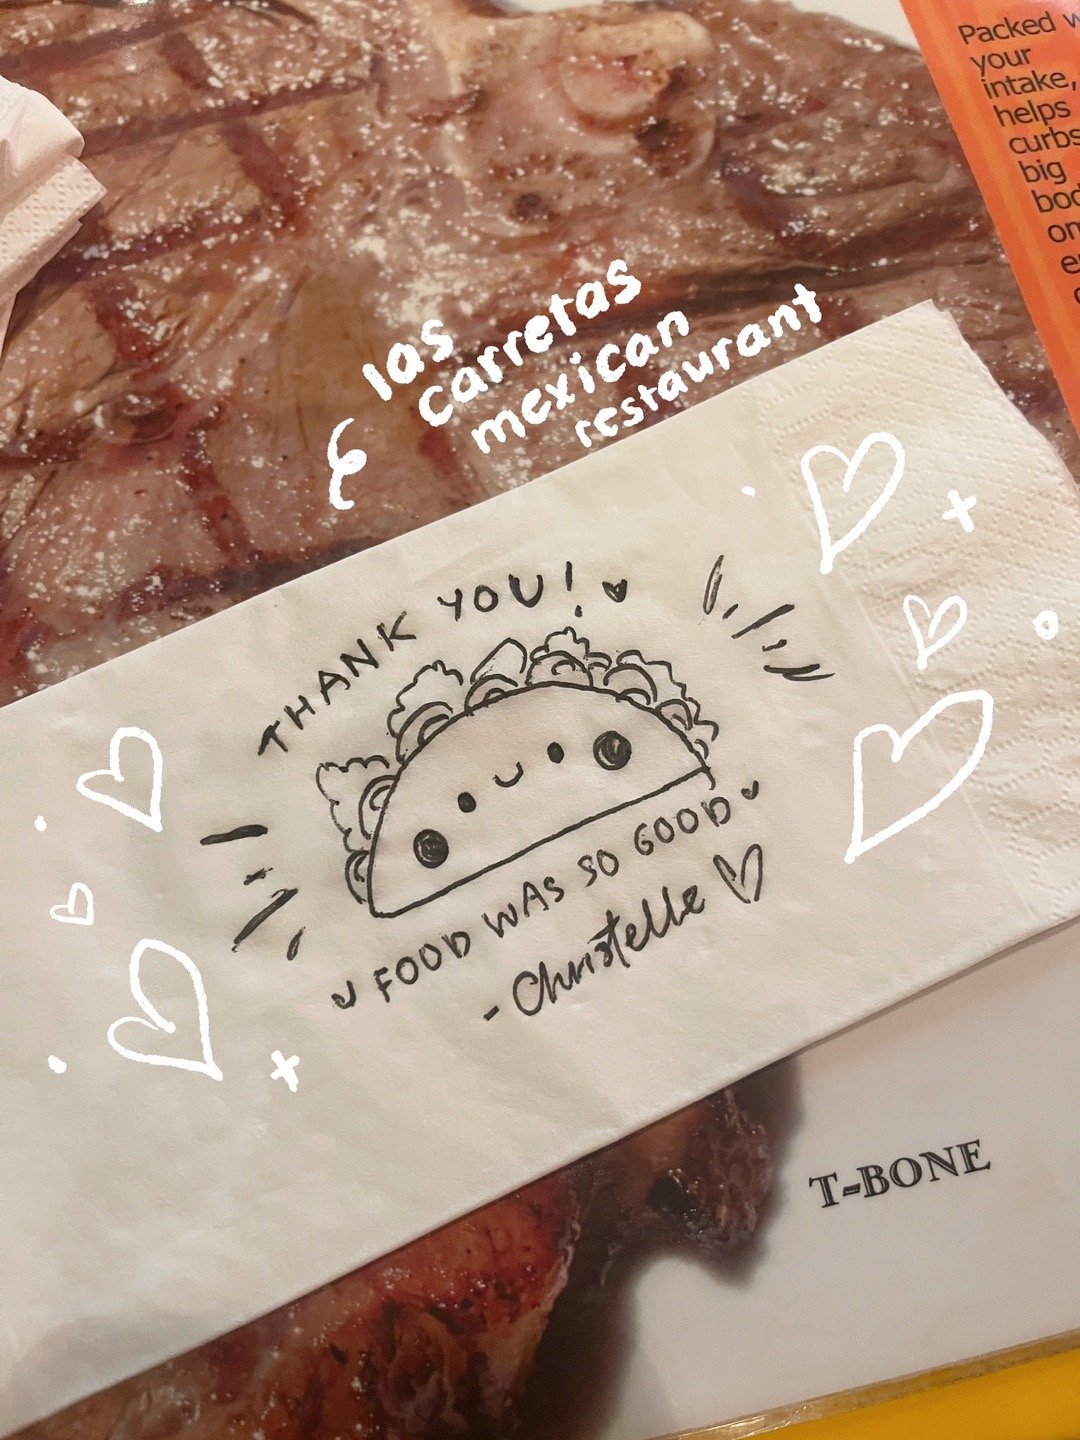 doodles restaurants thank you